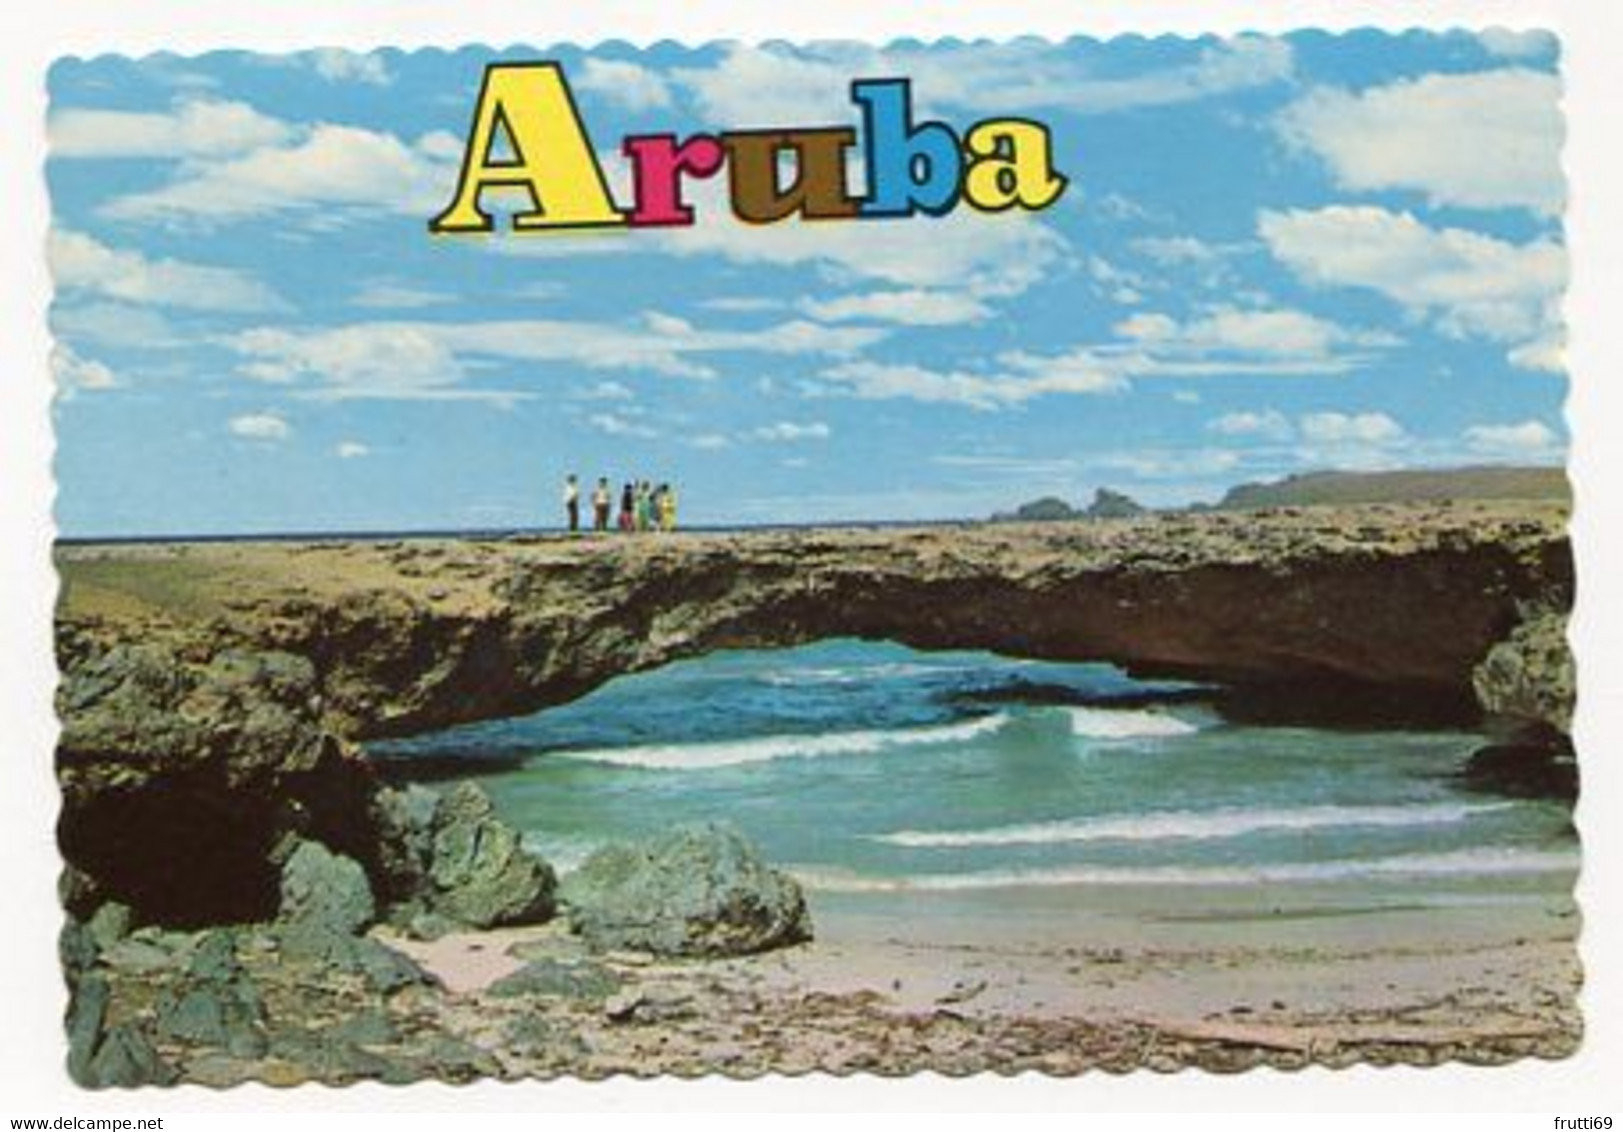 AK 047485 ARUBA - Natural Bridge - Aruba